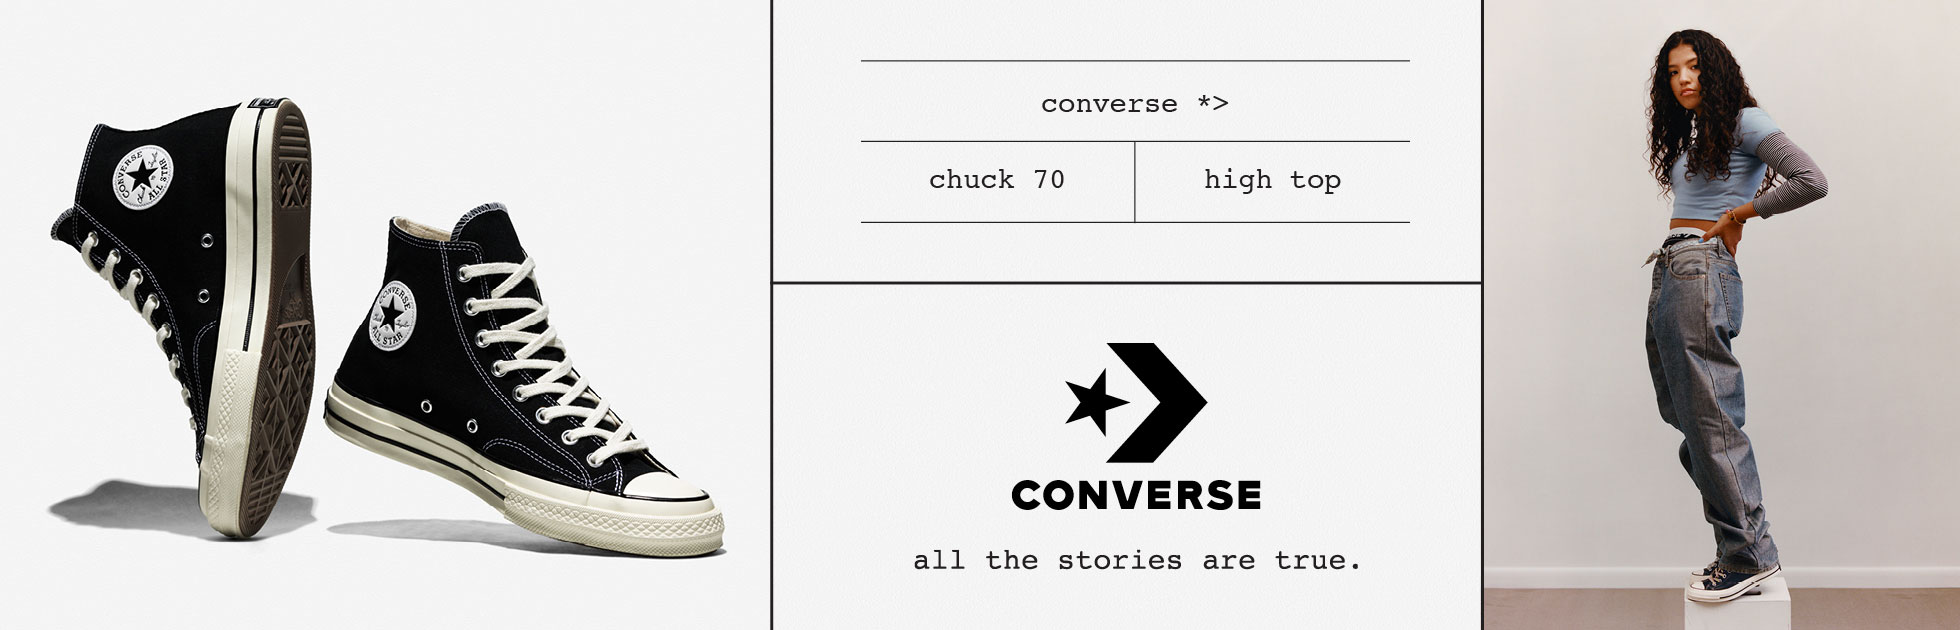 Women's Converse Shoes & Clothing | PacSun